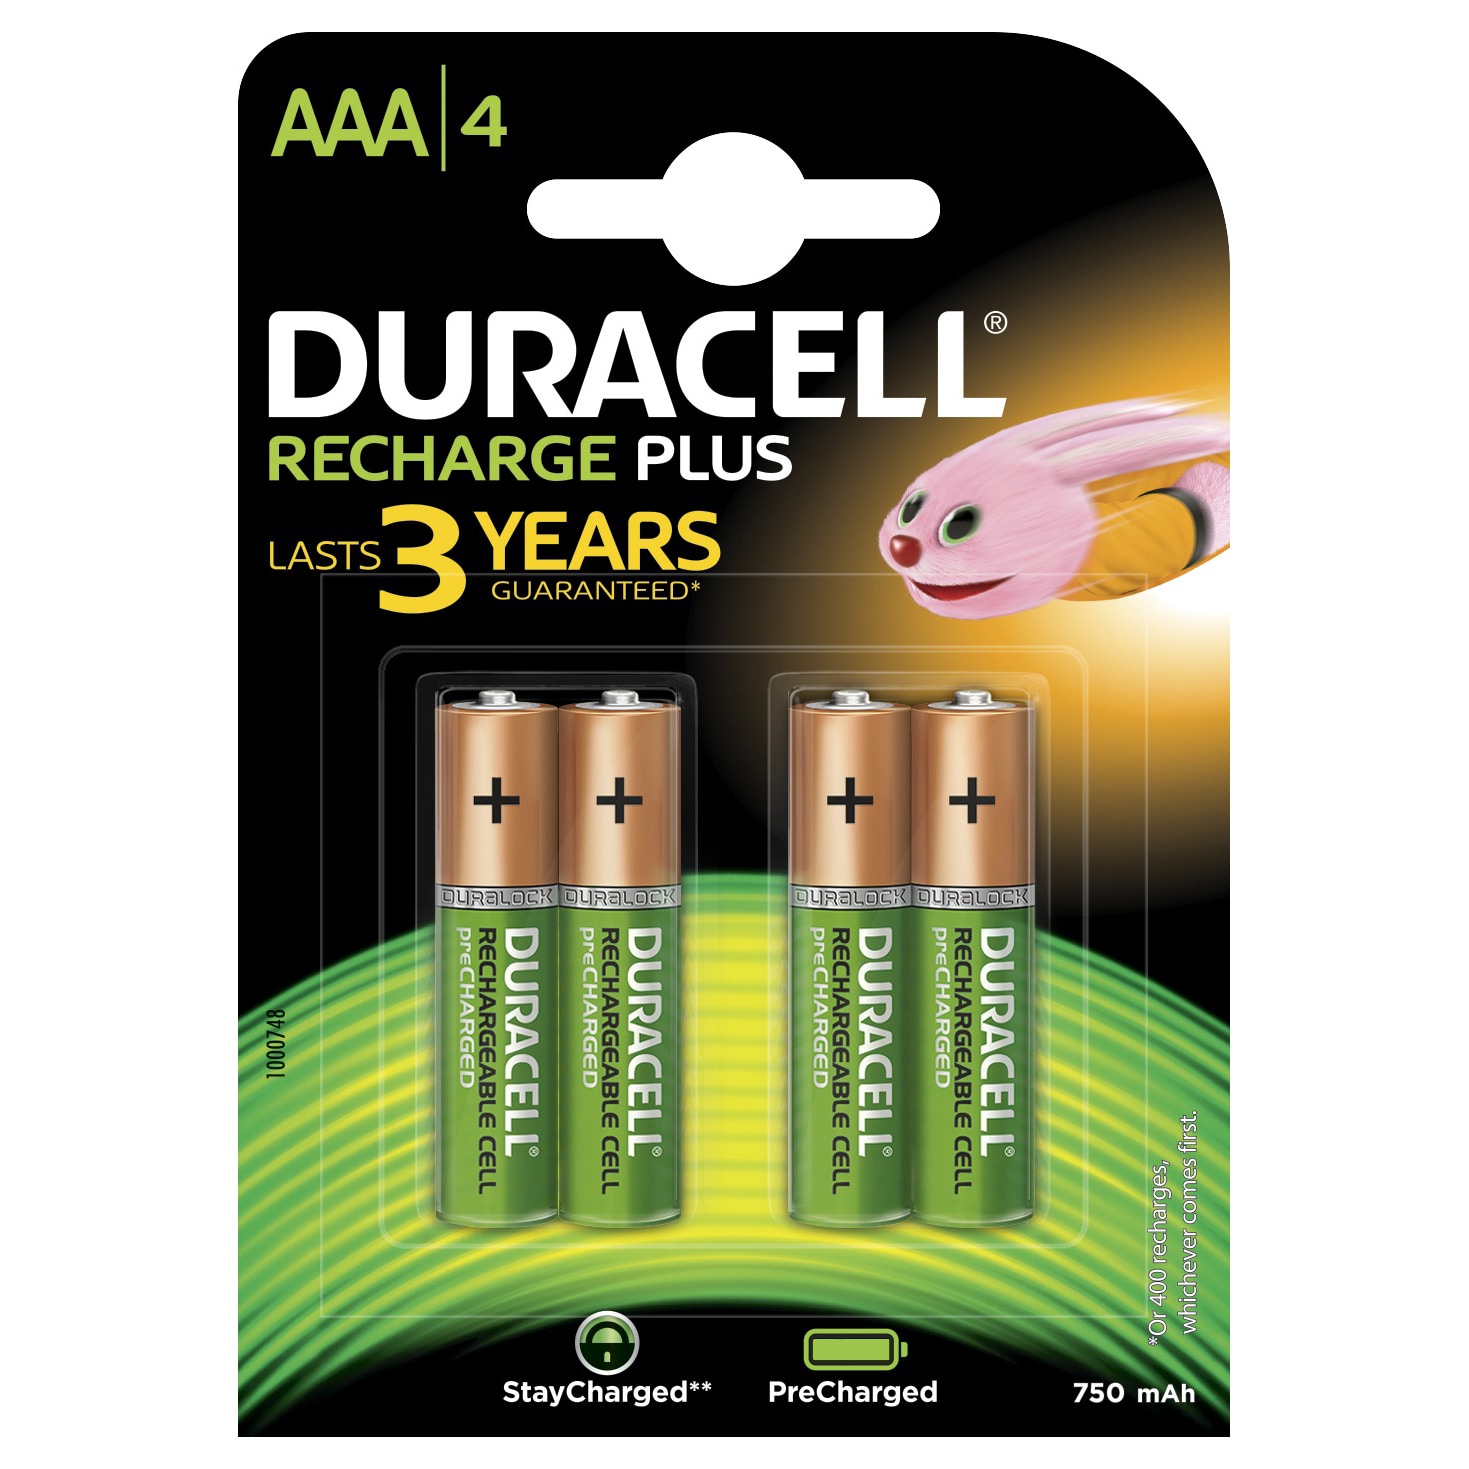 Duracell Recharge Plus AAA 750mAh batterier - 4 stk thumbnail